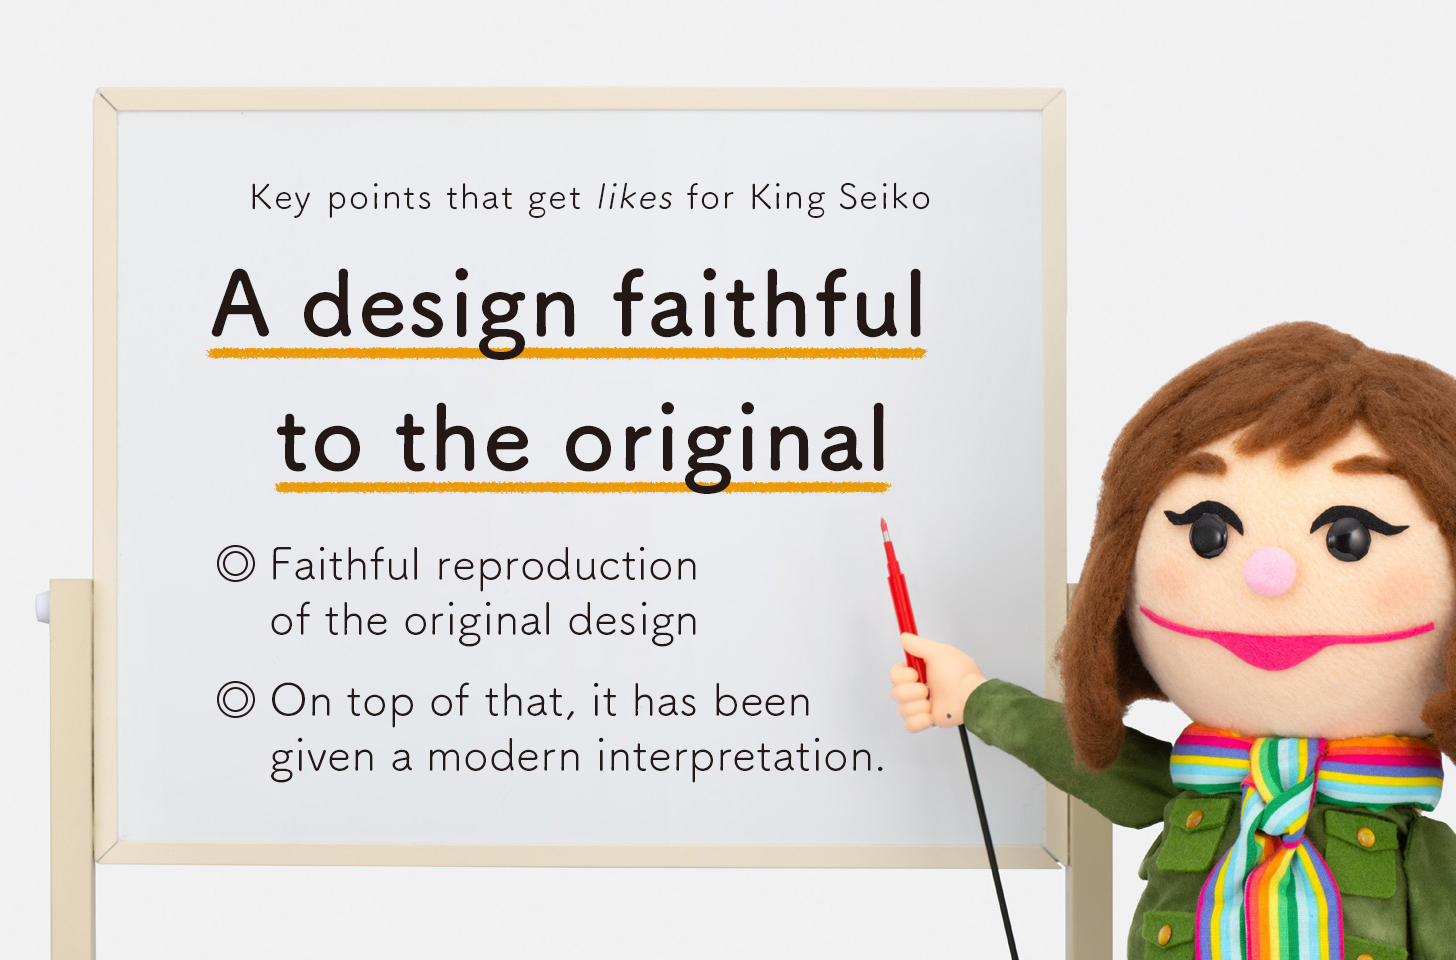 Key points that get likes for King Seiko A design faithful to the original / Faithful reproduction of the original design / On top of that, it has been given a modern interpretation.